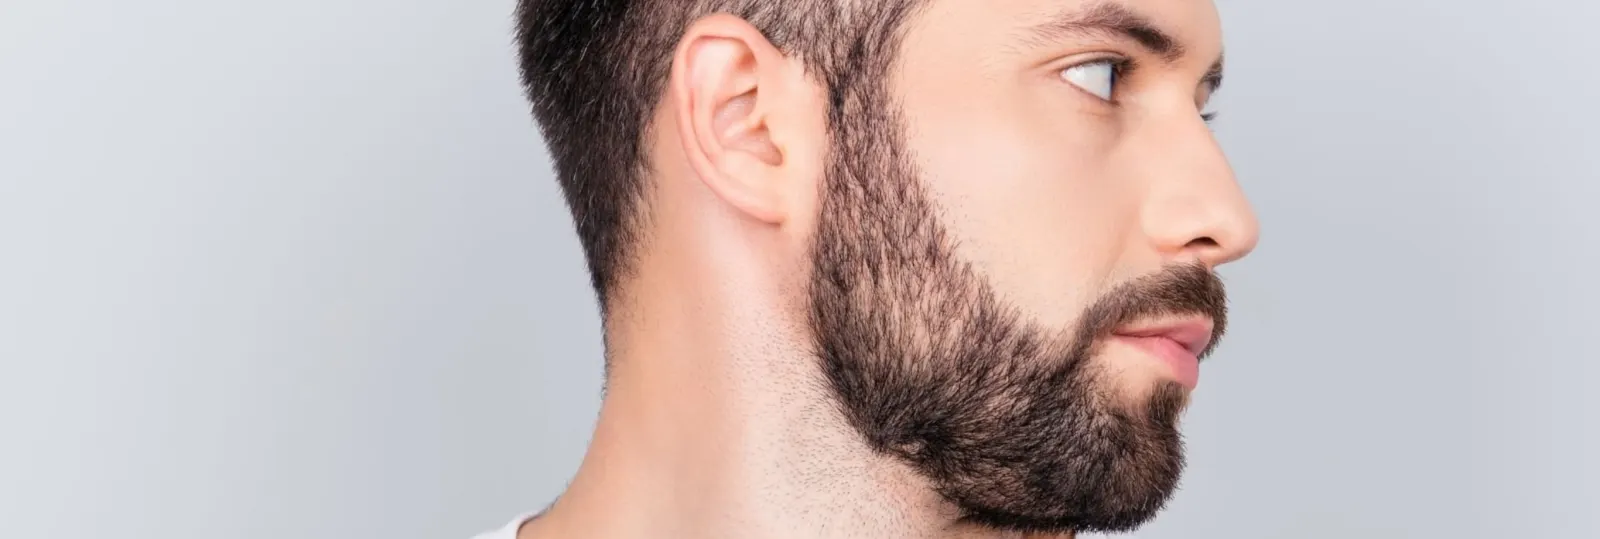 Bartkonturen richtig rasieren